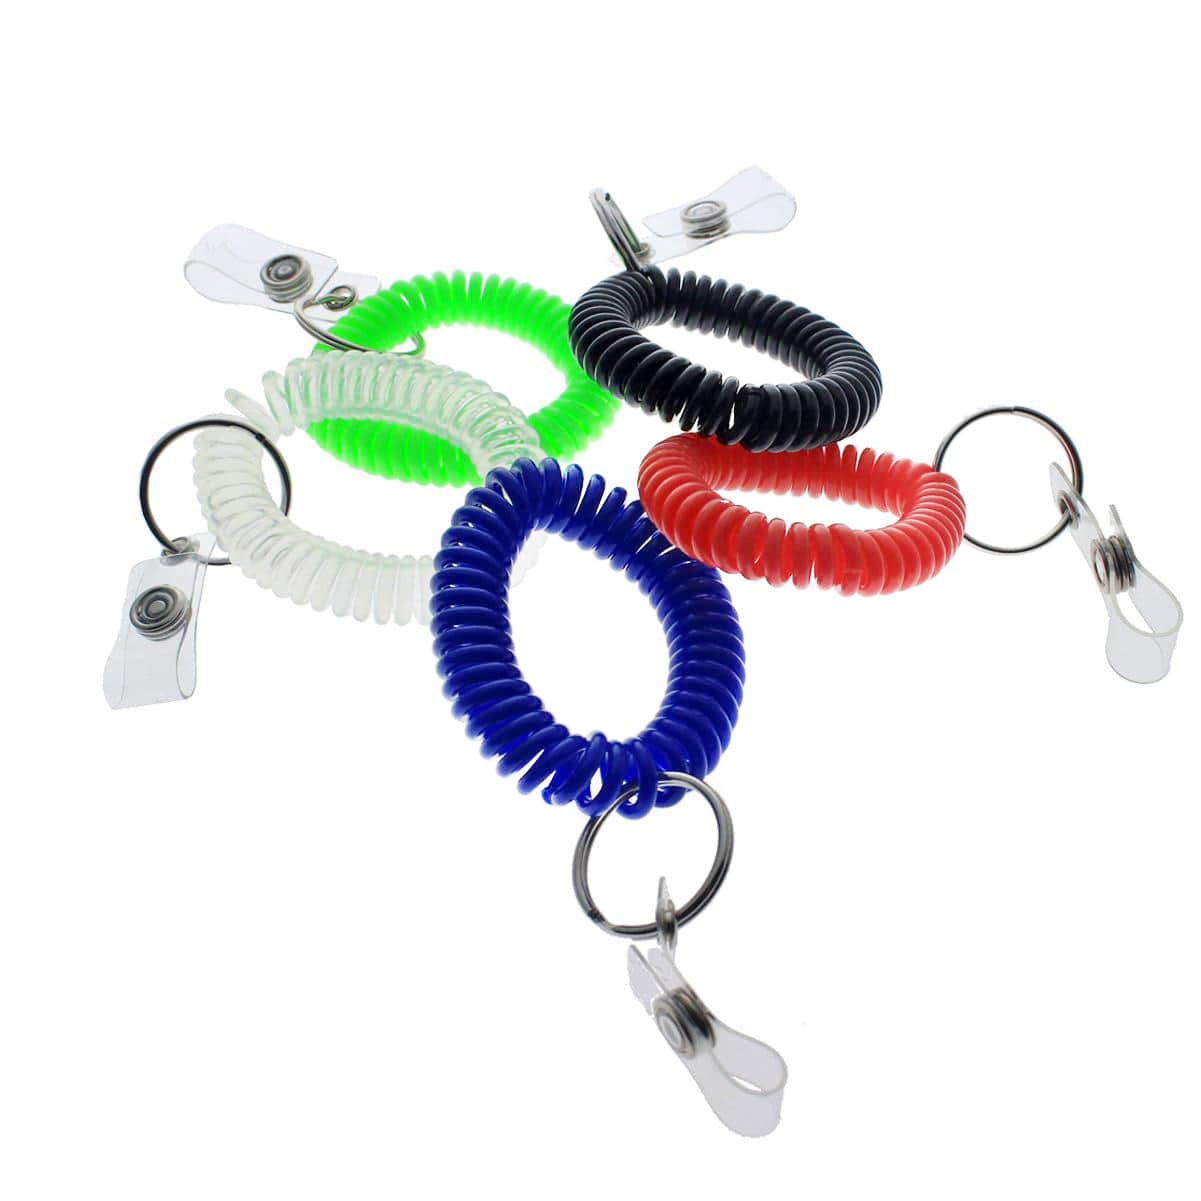 Plastic Coil Wrist Band Key Ring Stretchable Spring Bracelet Key Chain  Keyring Holder